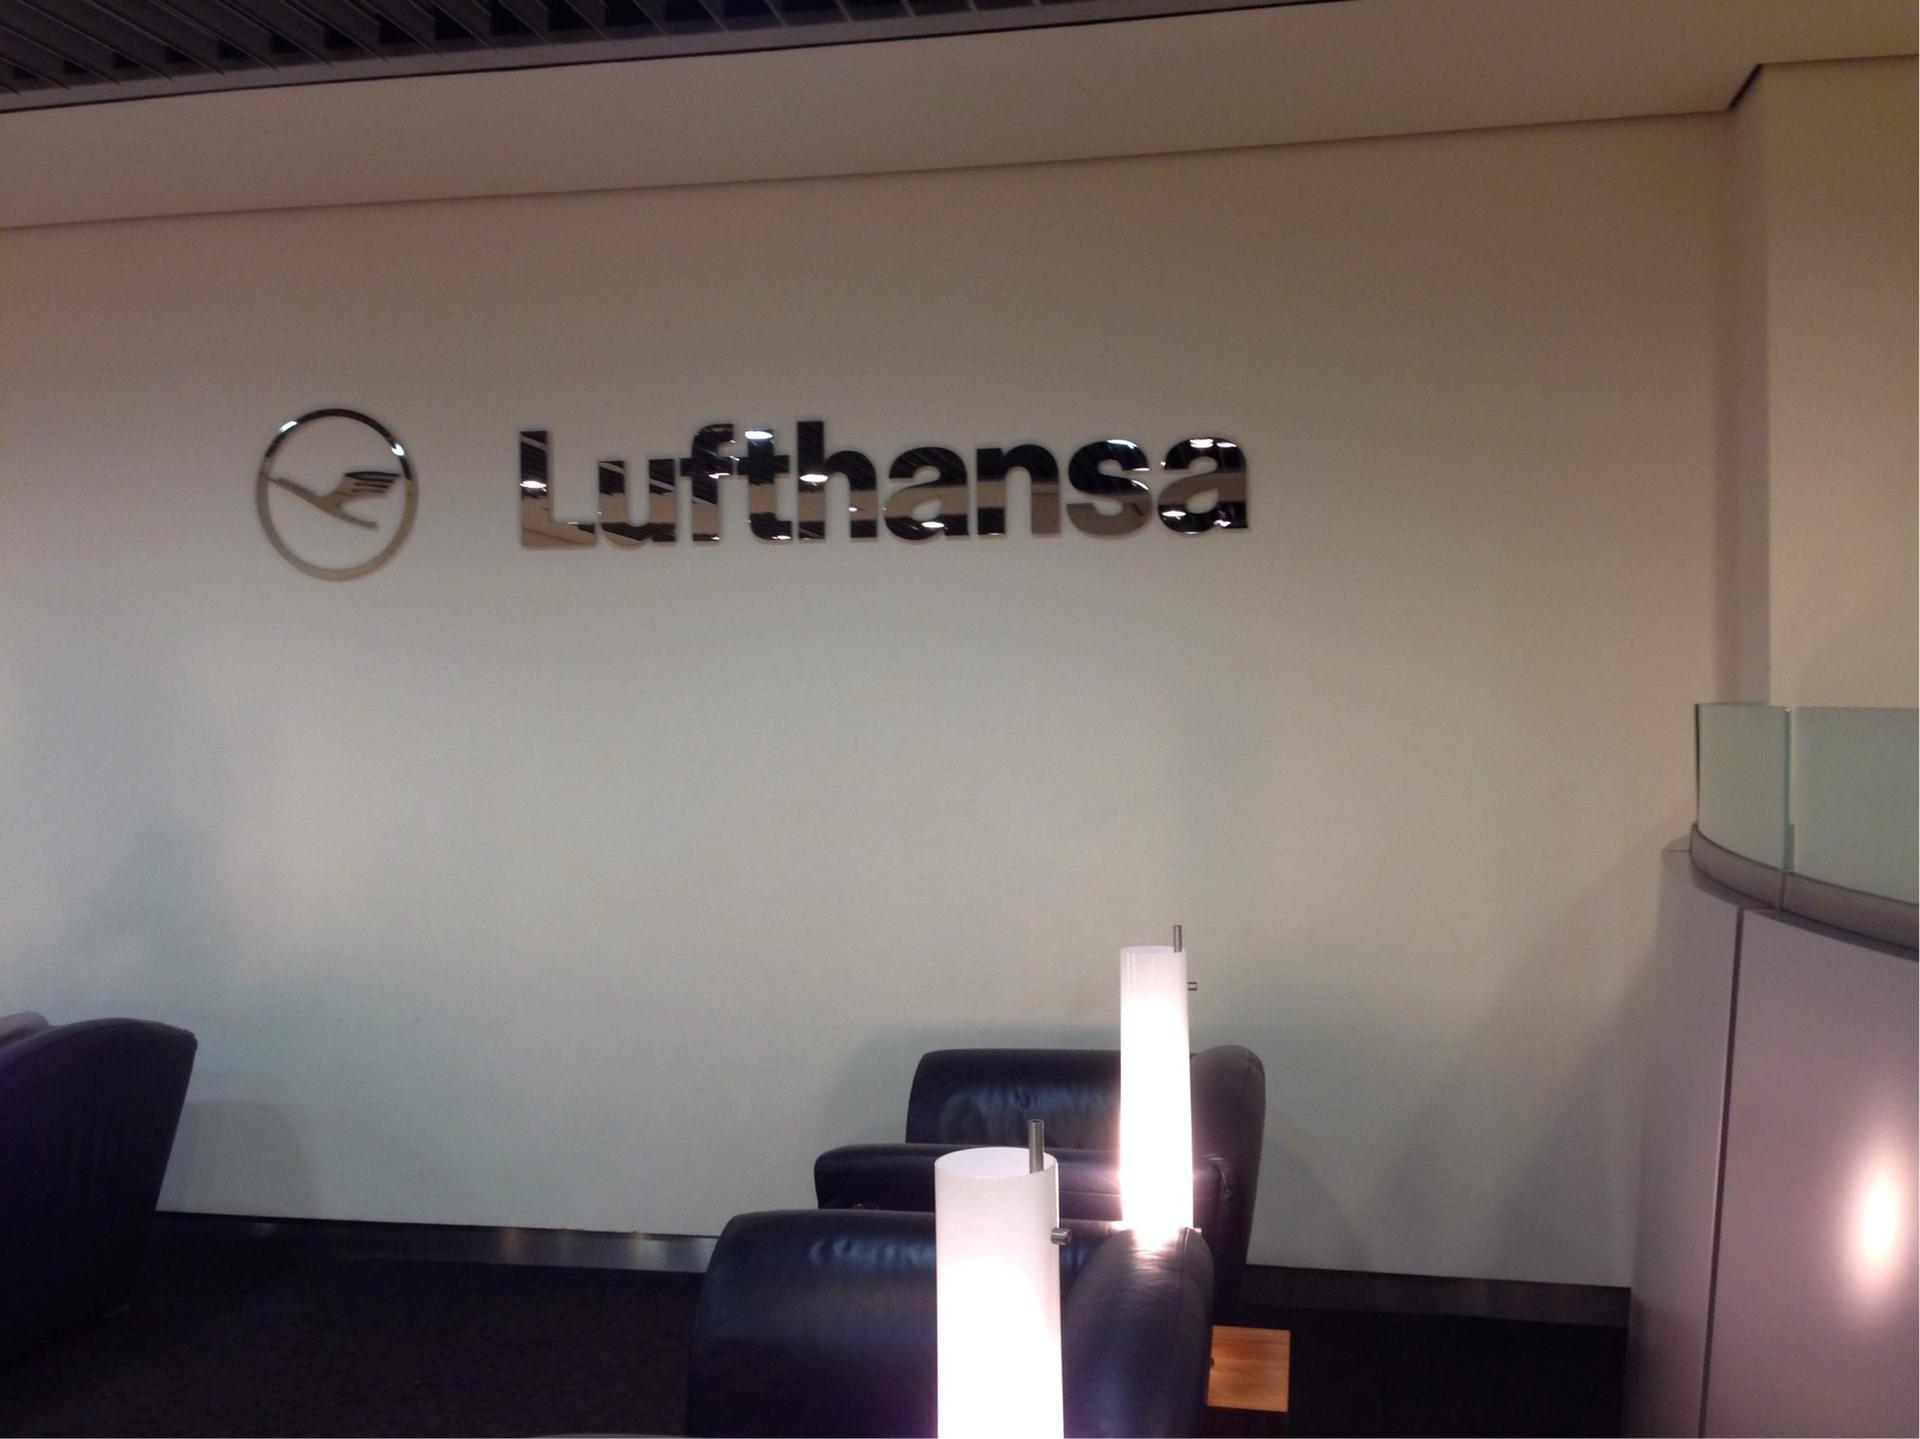 Lufthansa Senator Lounge image 4 of 7